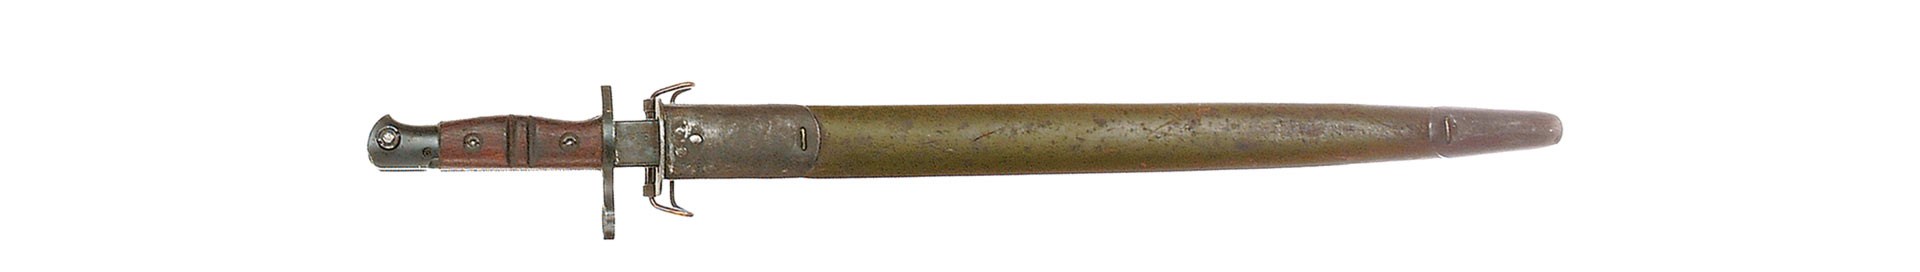 brown bayonet for shotgun